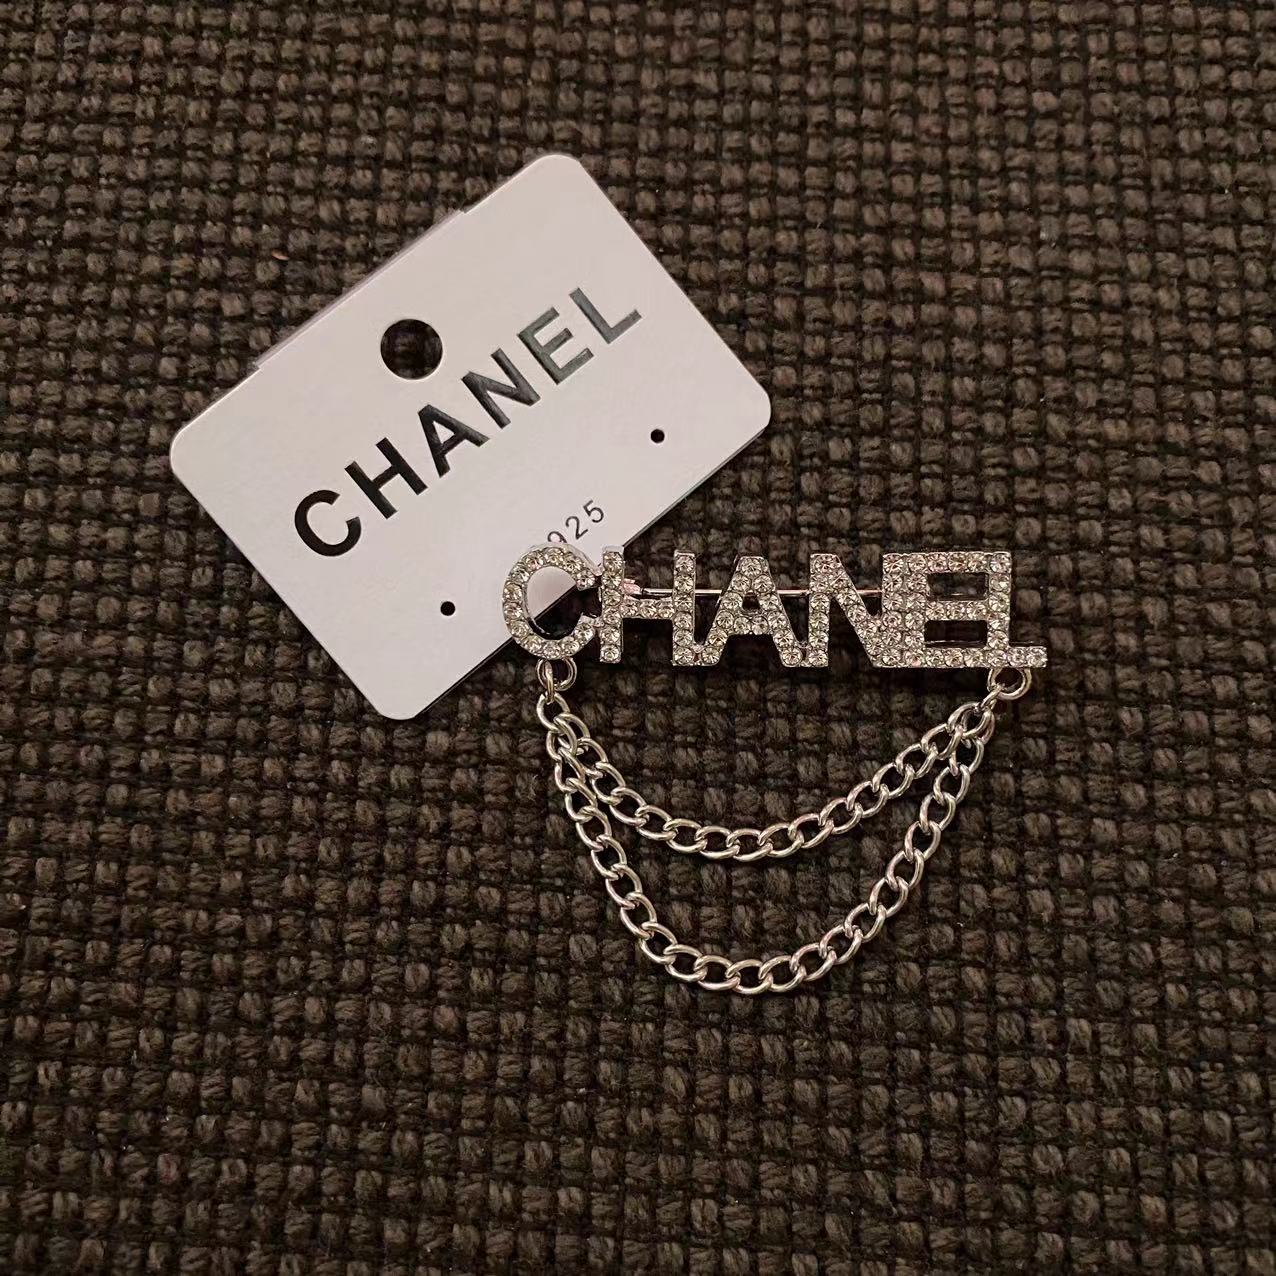 Big sale! Chanel brooch silver